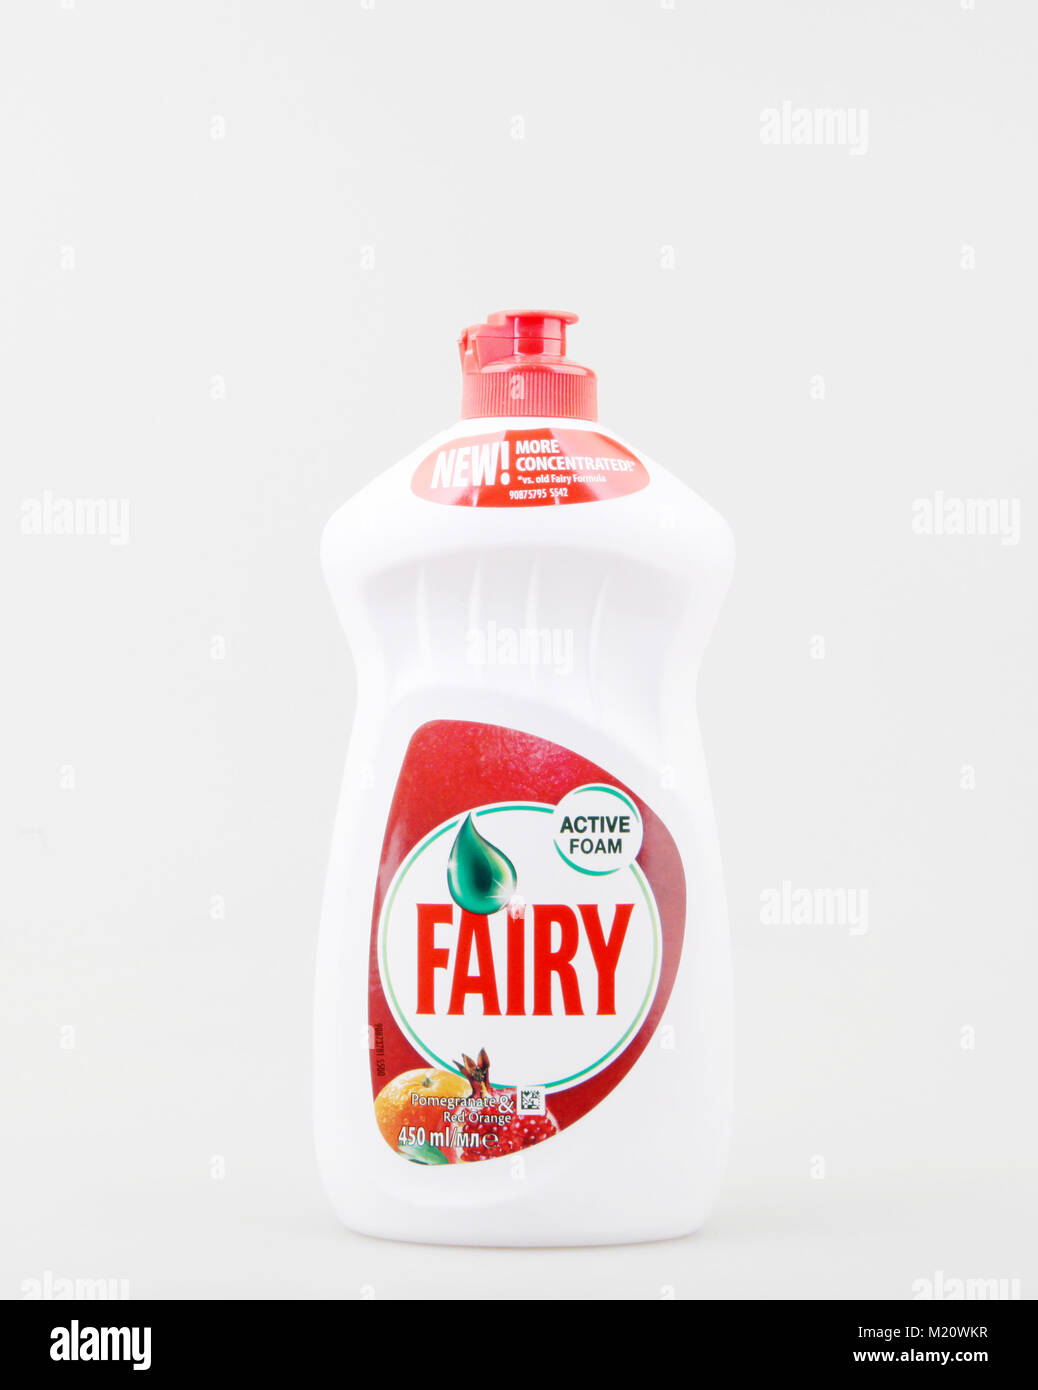 Pomorie, Bulgaria - Februari 03, 2018: Fairy dish washing liquid. Fairy is a brand of washing-up liquid produced by Procter & Gamble. Stock Photo